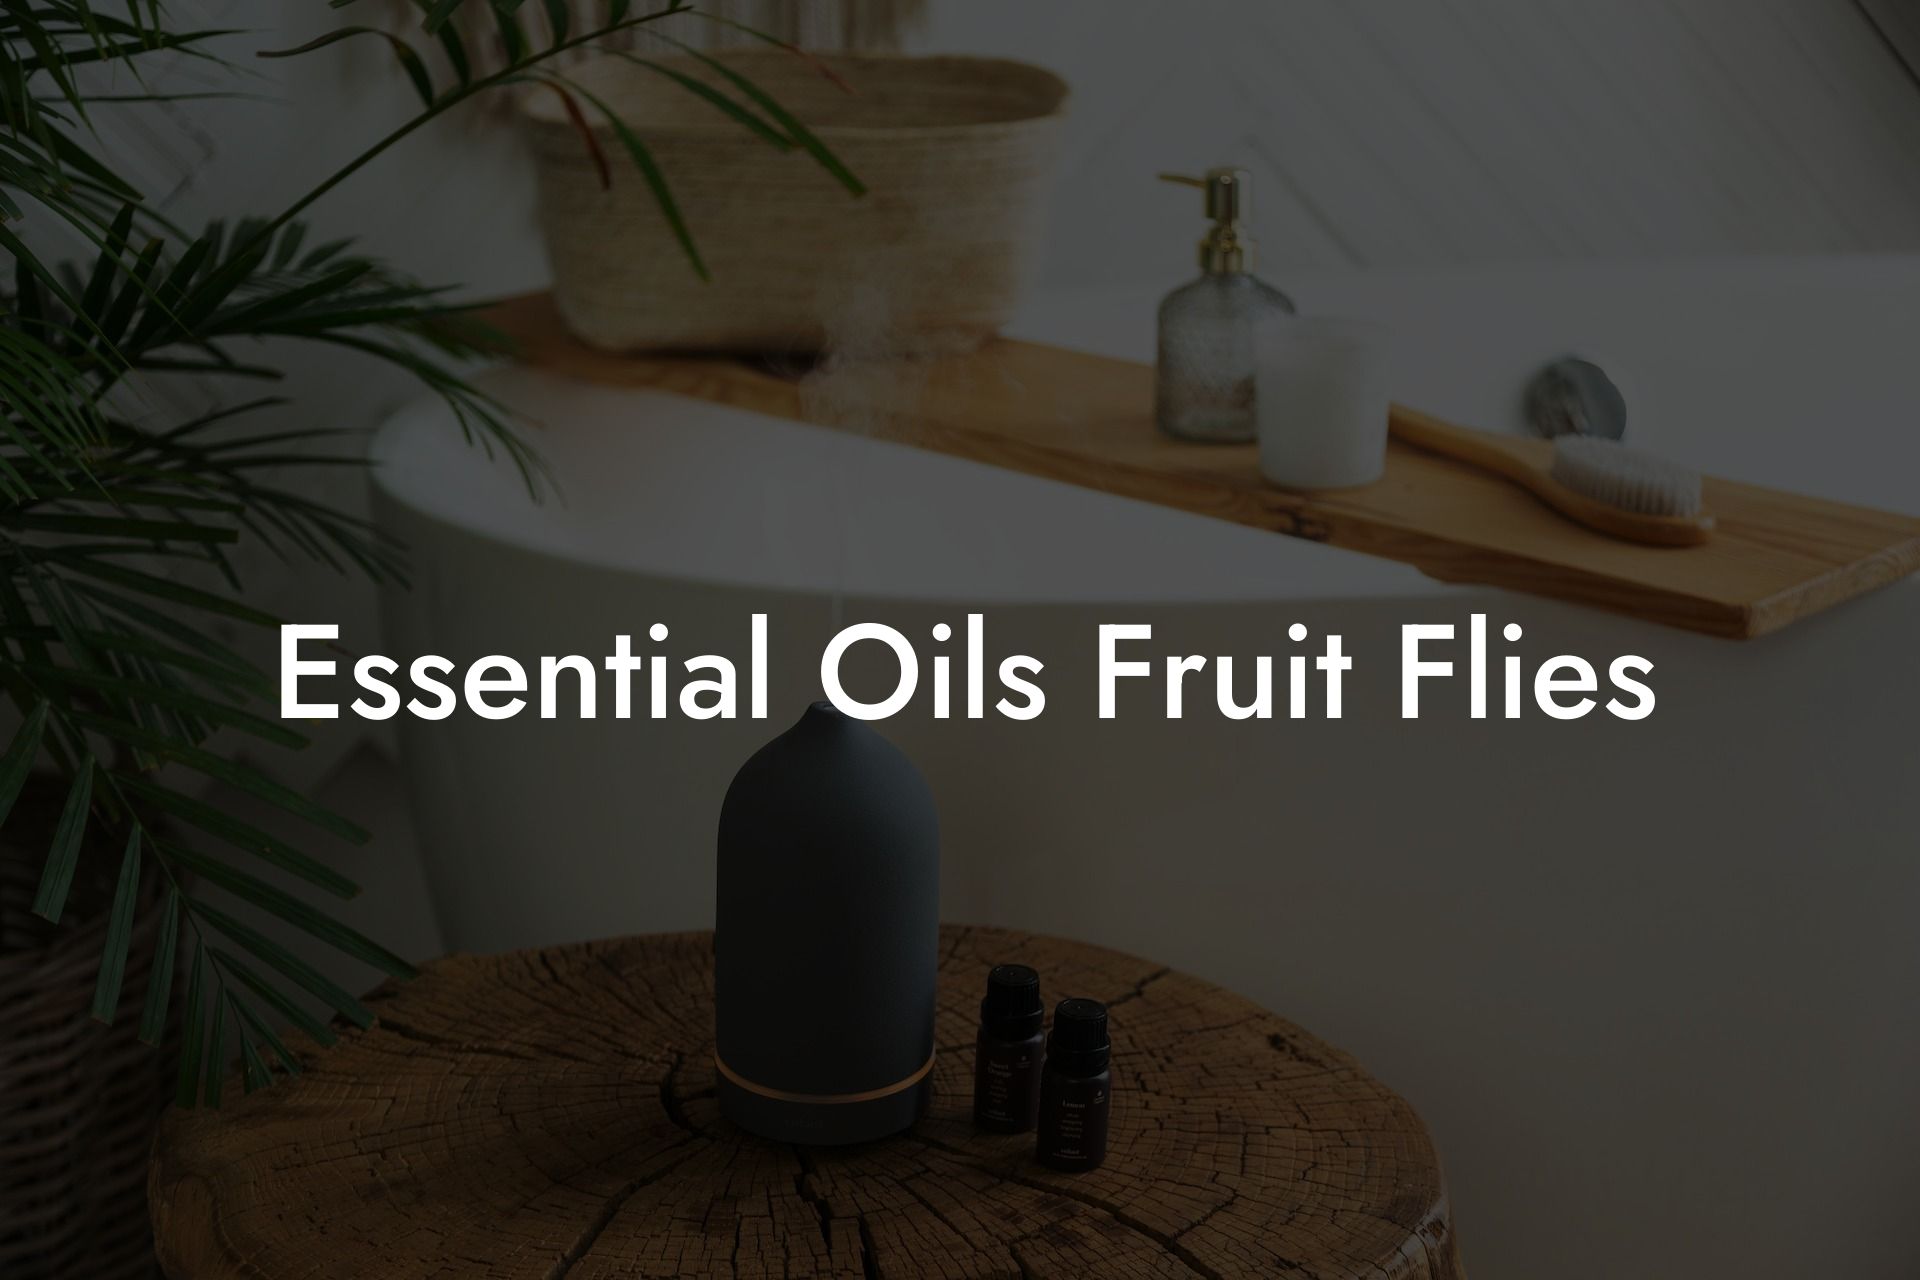 Essential Oils Fruit Flies